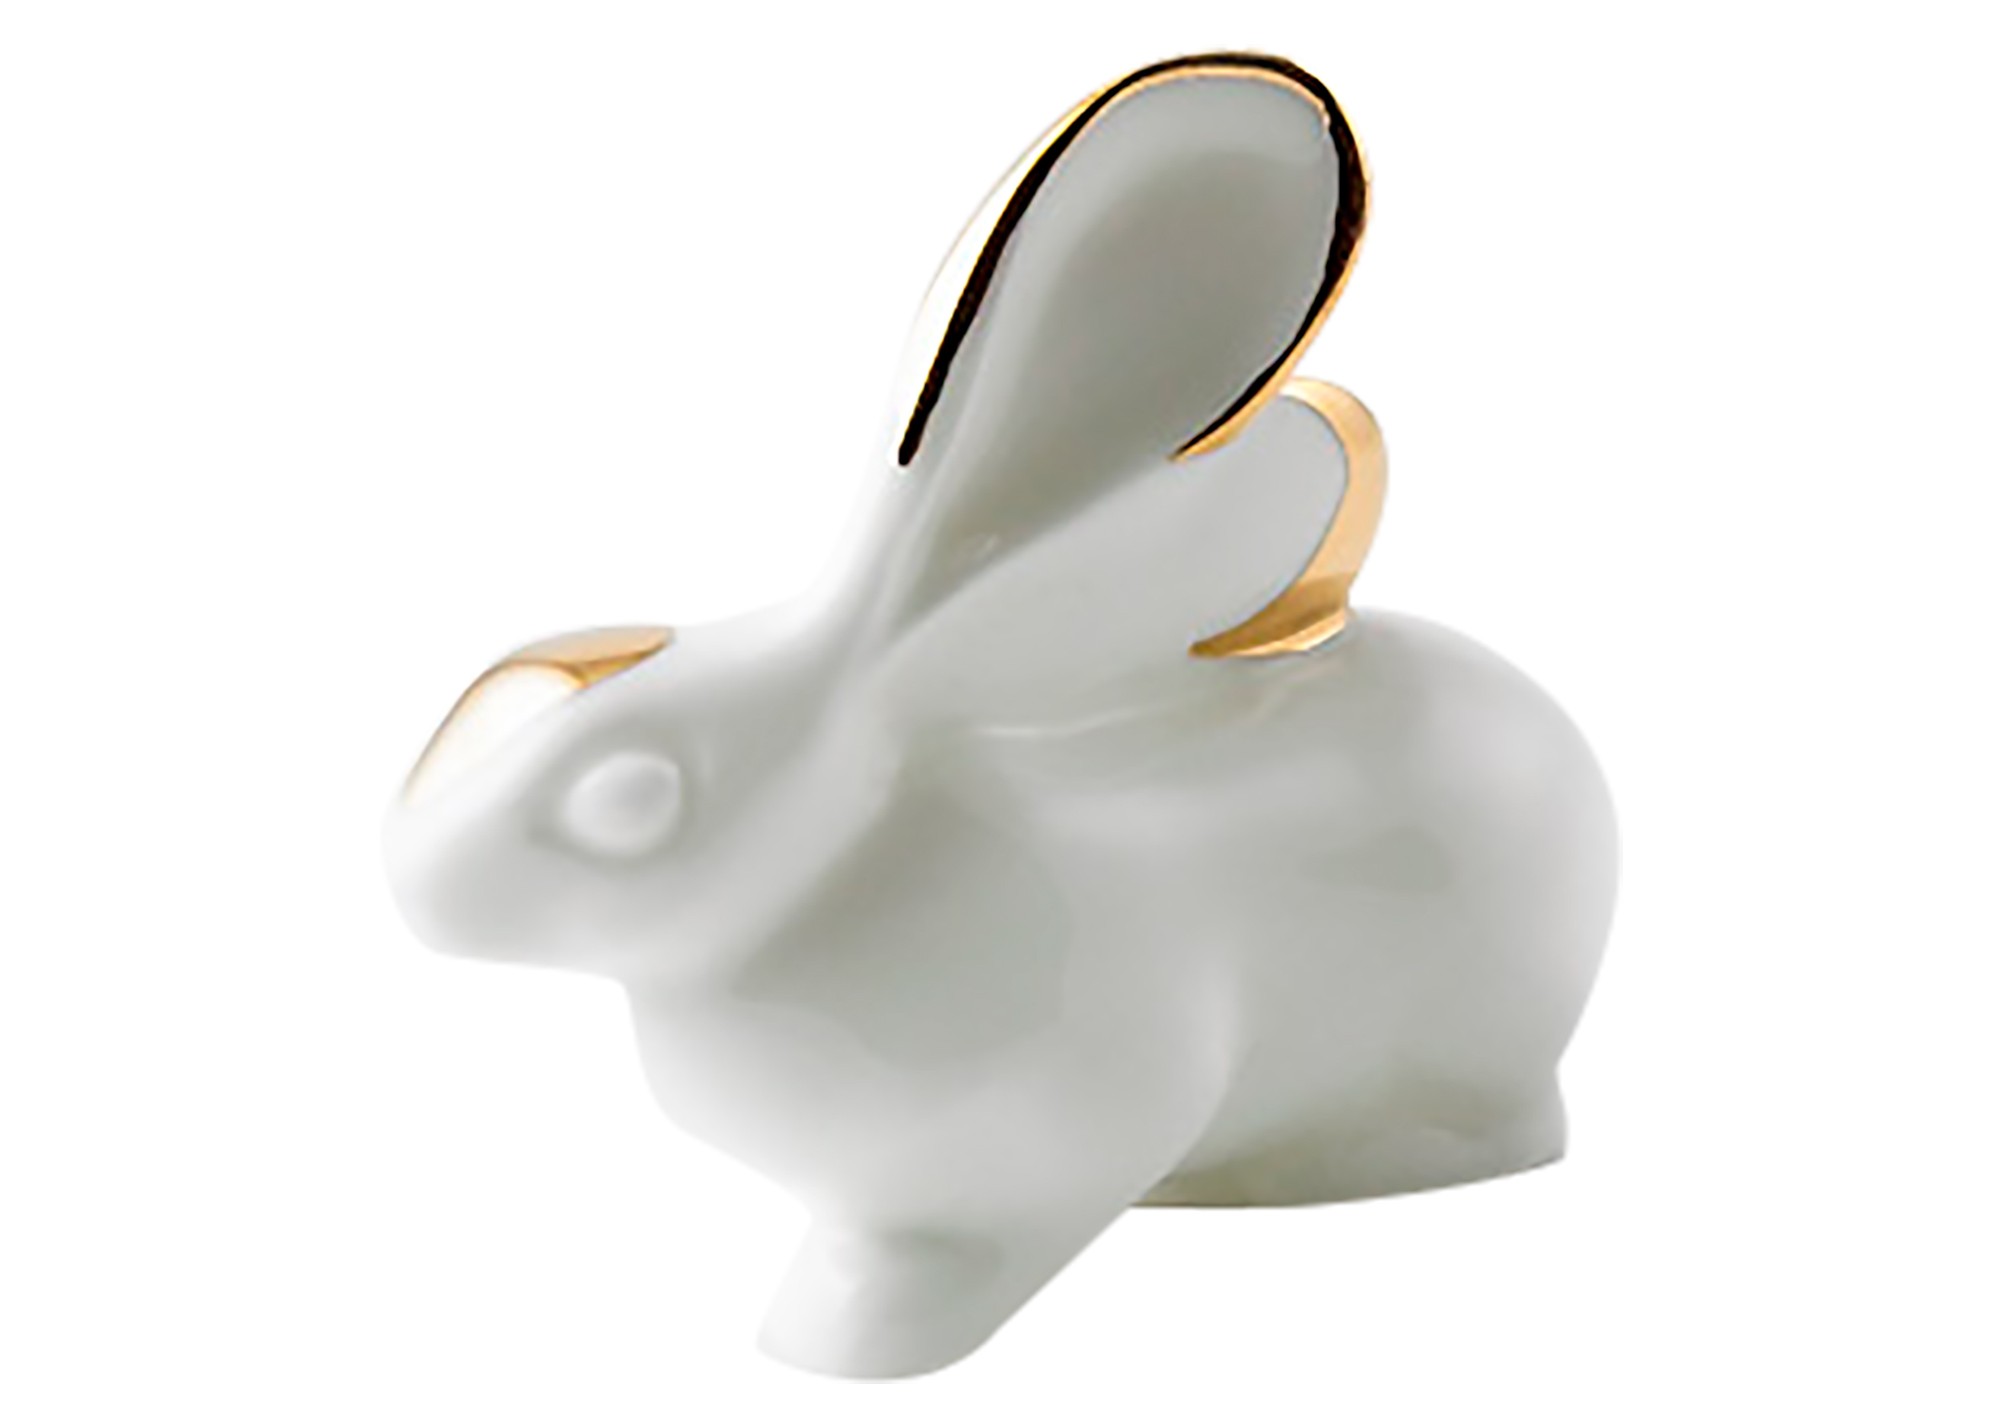 Buy Chinese Zodiac Rabbit Gift at GoldenCockerel.com